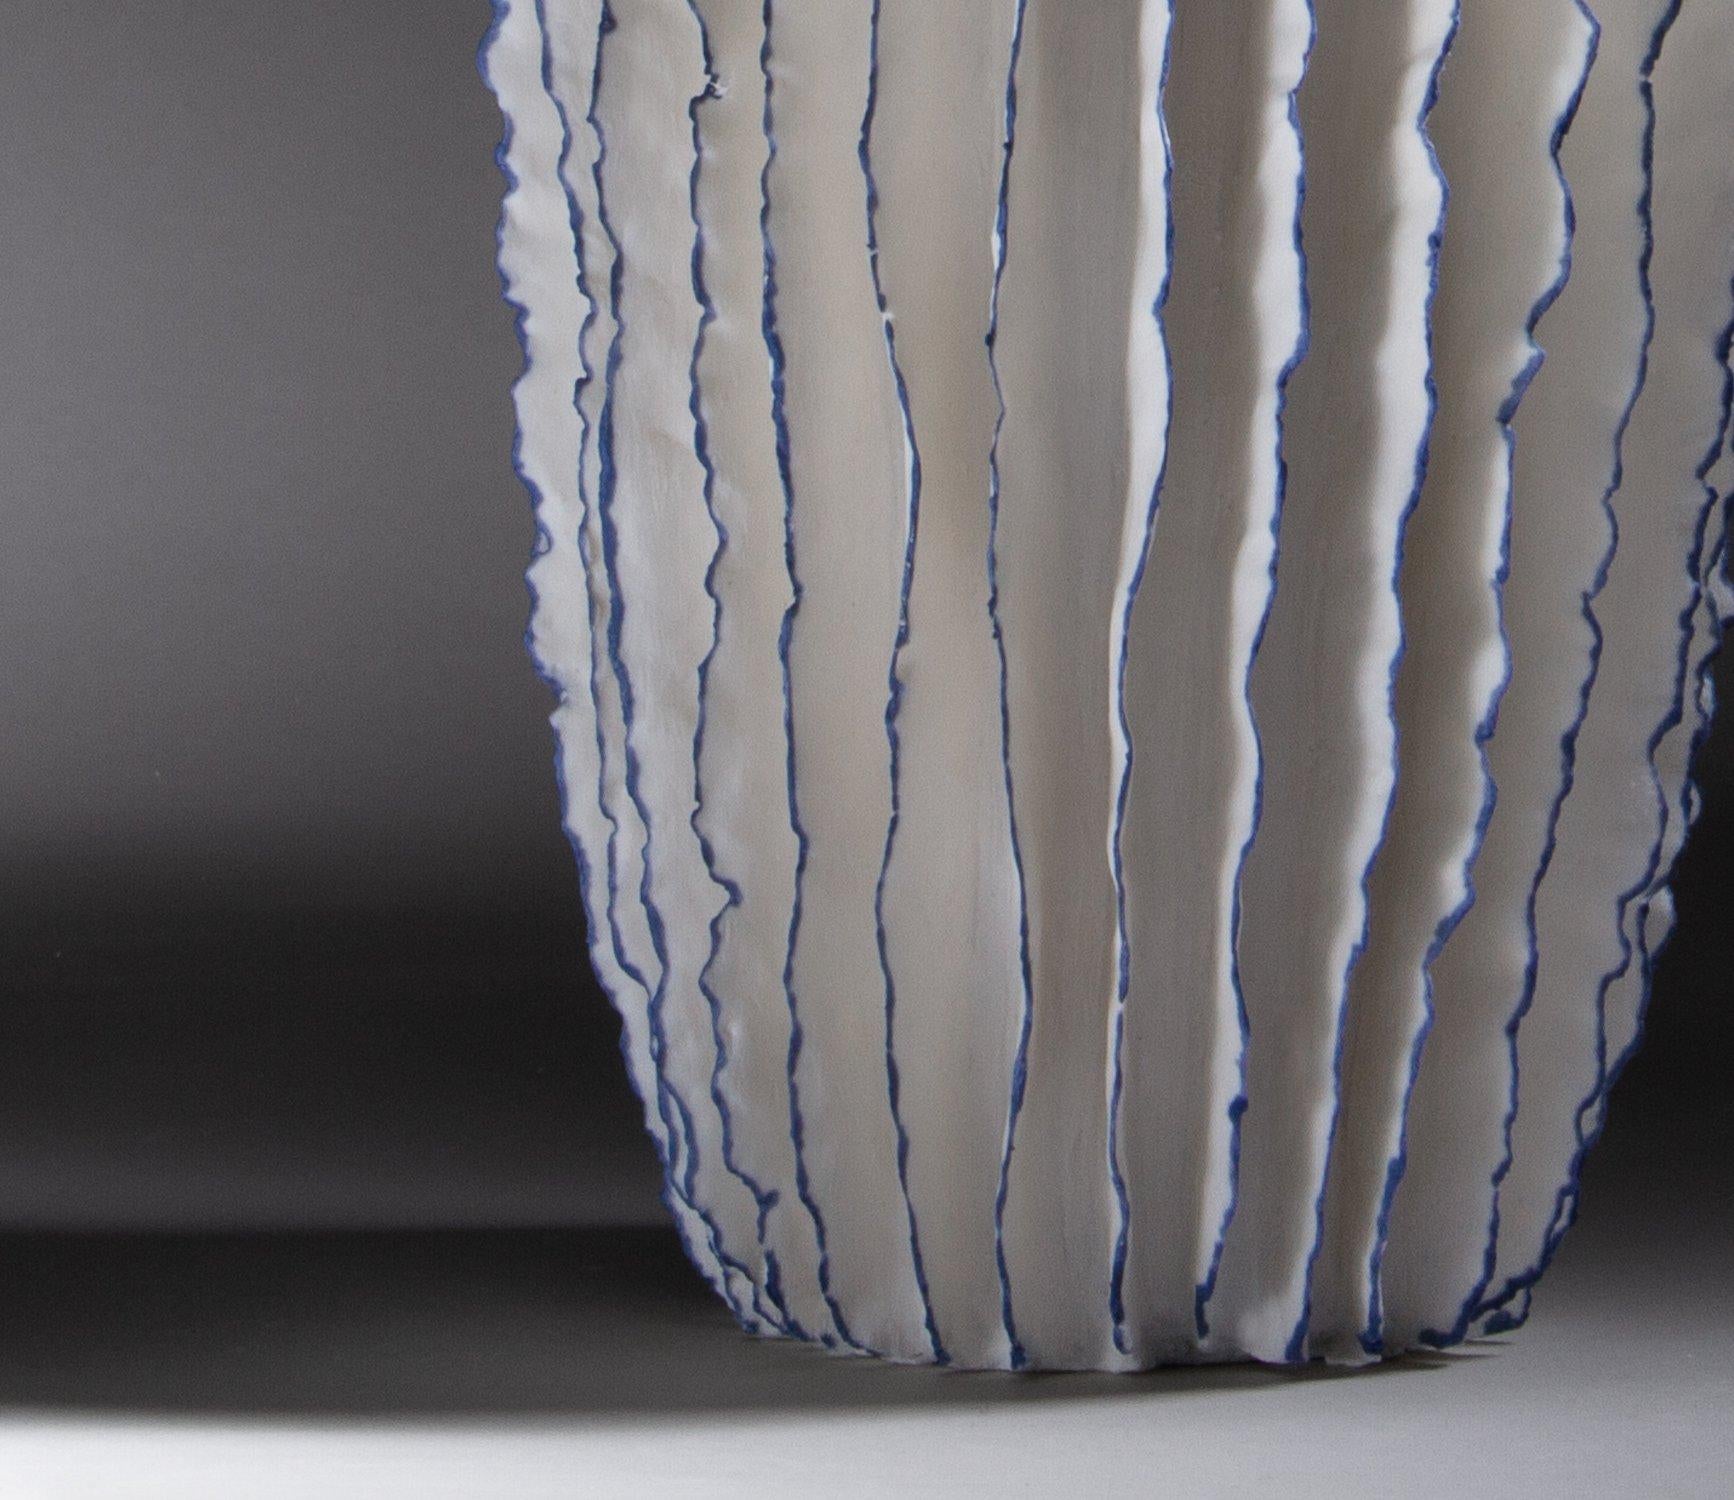 Contemporary Ruffled Blue and White Cactus-like Ceramic Sculpture, Sandra Davolio For Sale